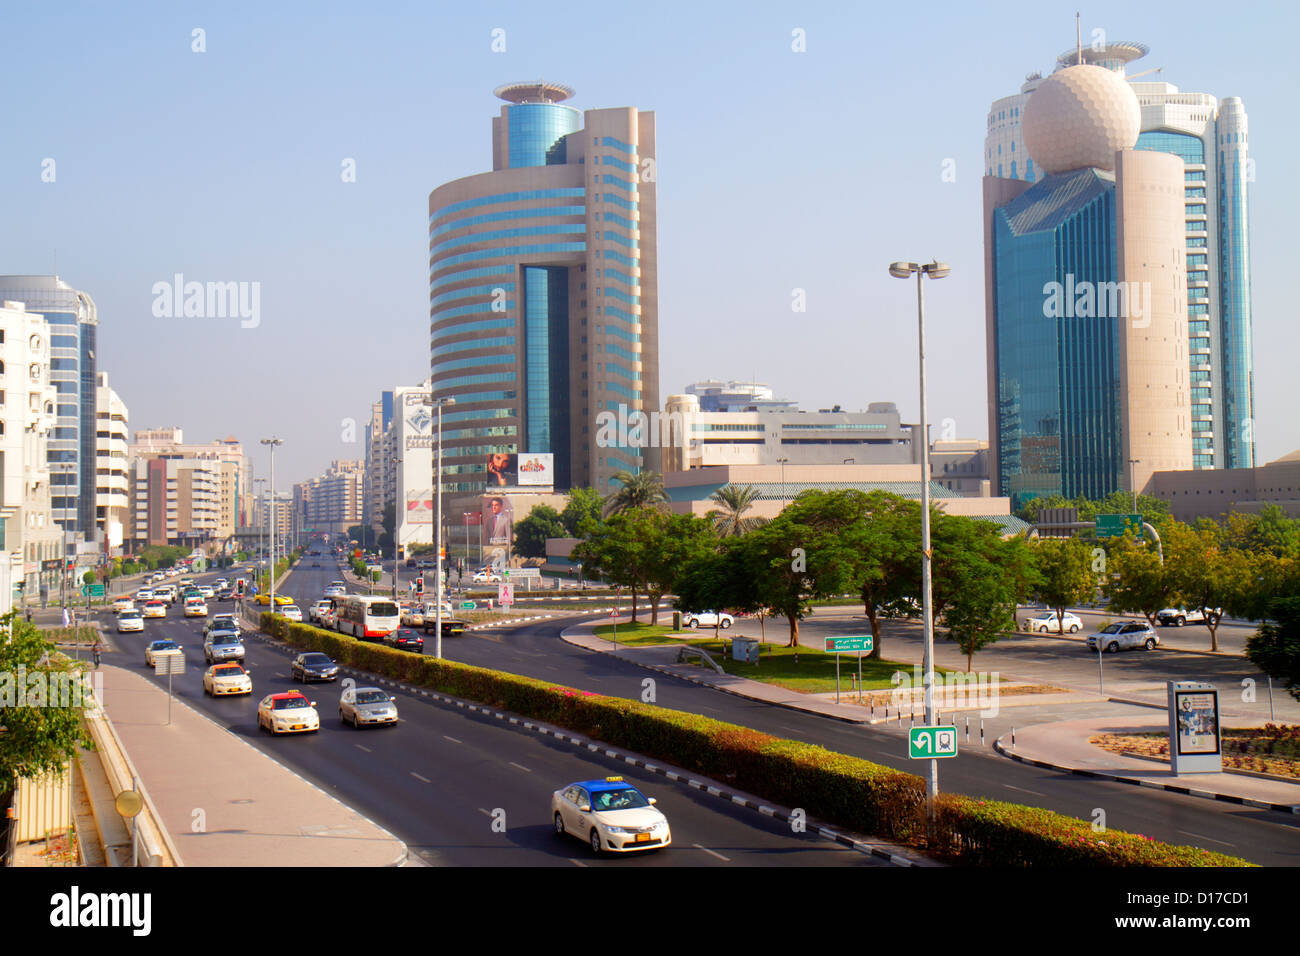 Dubai UAE,Emirati Arabi Uniti,Deira,al Maktoum Road,traffico,taxi,taxi,taxi,taxi,taxi,Dubai Creek Tower,al Reem Tower,Etisalat Tower i,UAE121012036 Foto Stock